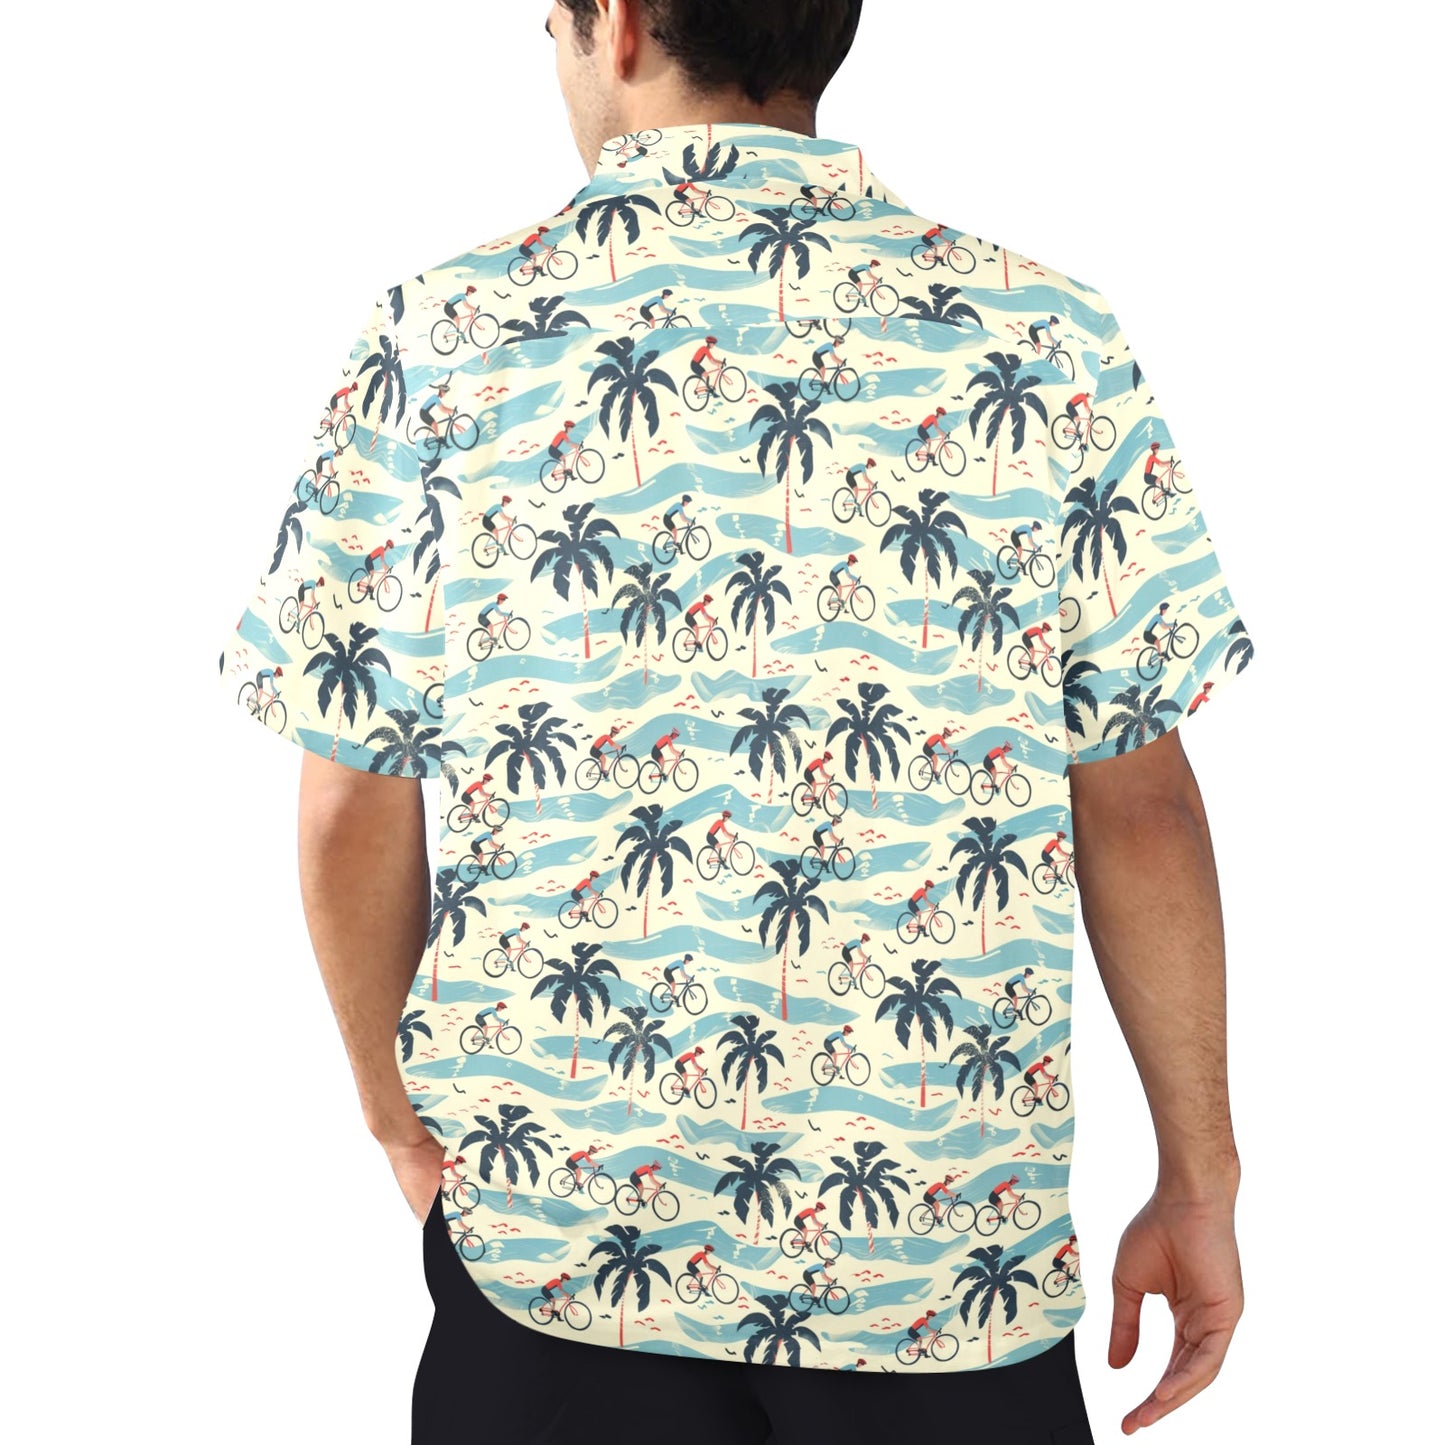 Cycling Men Hawaiian shirt, Biking Bicycle Palm Trees Beach Blue Cream Vintage Aloha Hawaii Retro Tropical Plus Size Pocket Guys Button Down